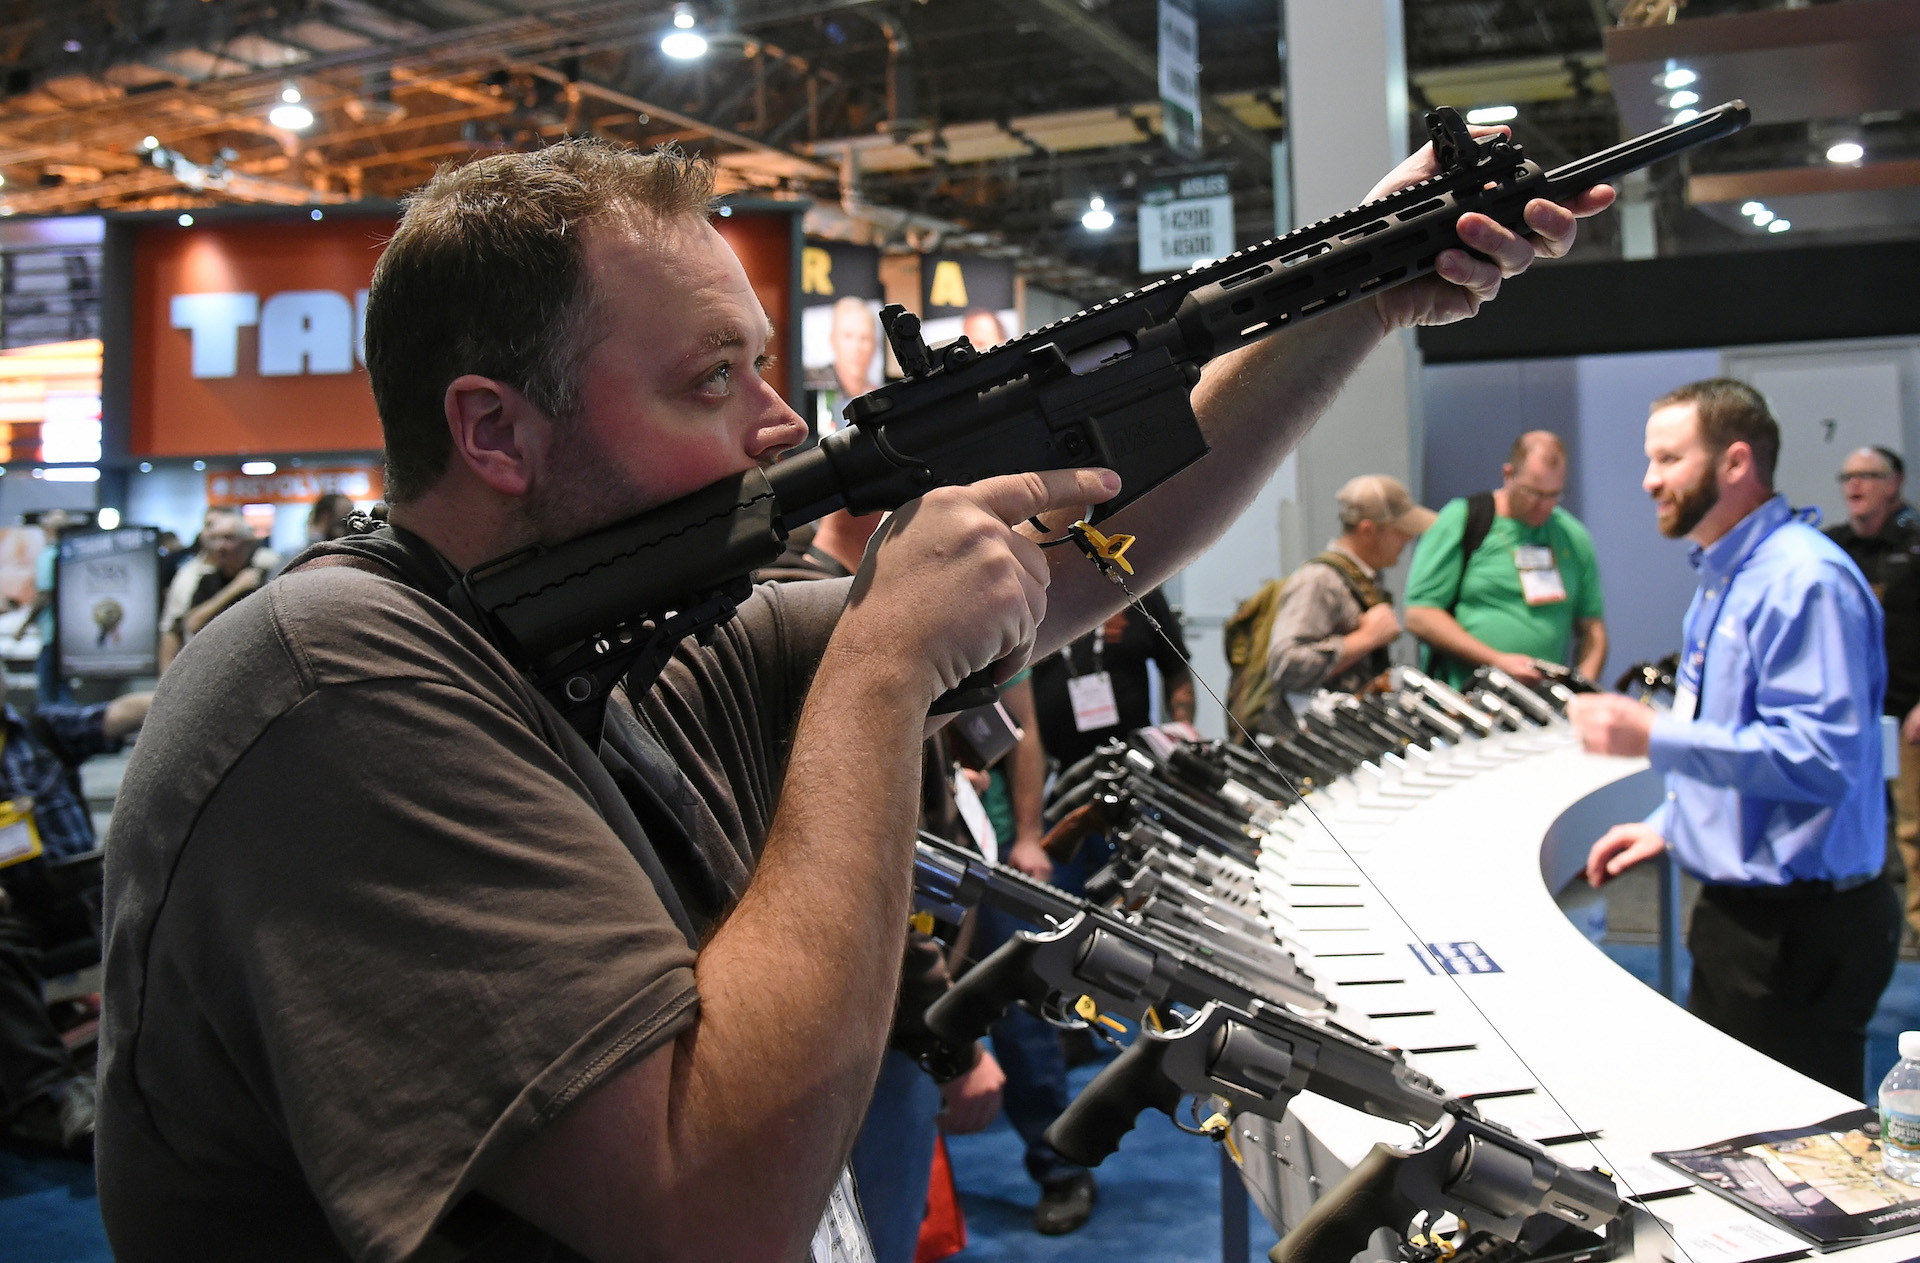 Gun wounds in California spike every time Nevada has a gun show – VICE News